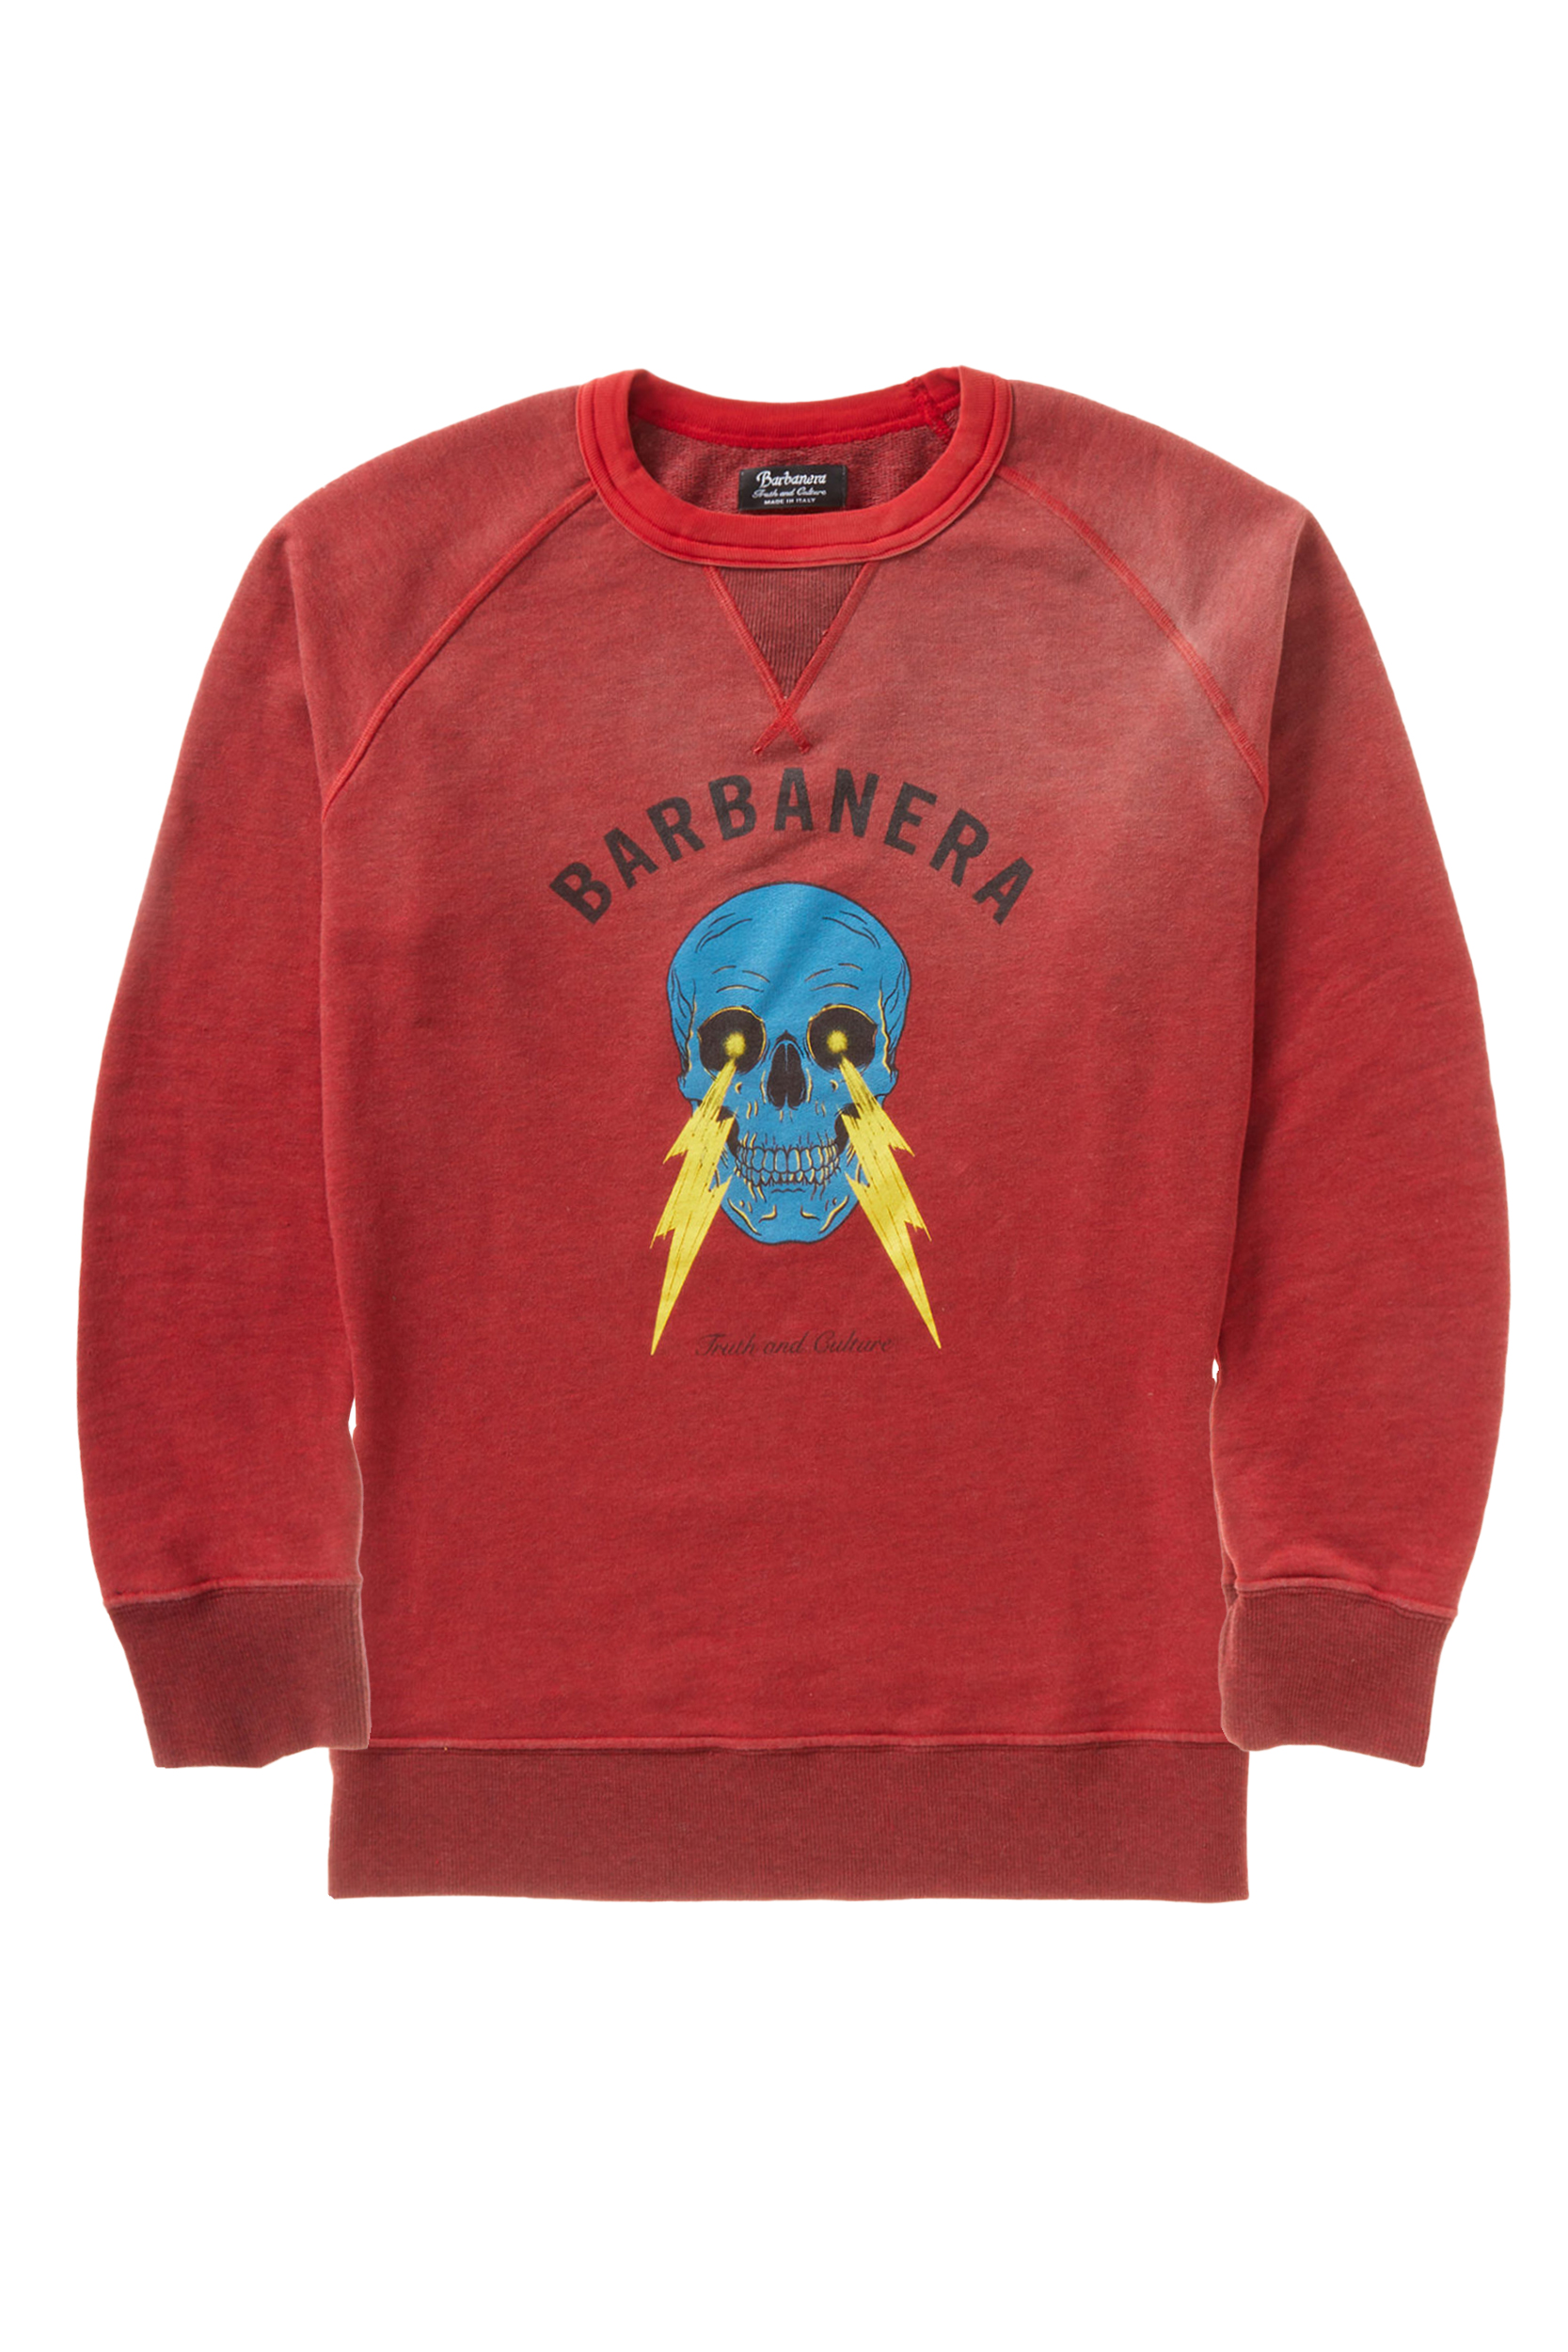 Meroni Vintage Neck Red Barbanera Cotton Crew Graphic Lightning And Bolt - Sweatshirt Skull